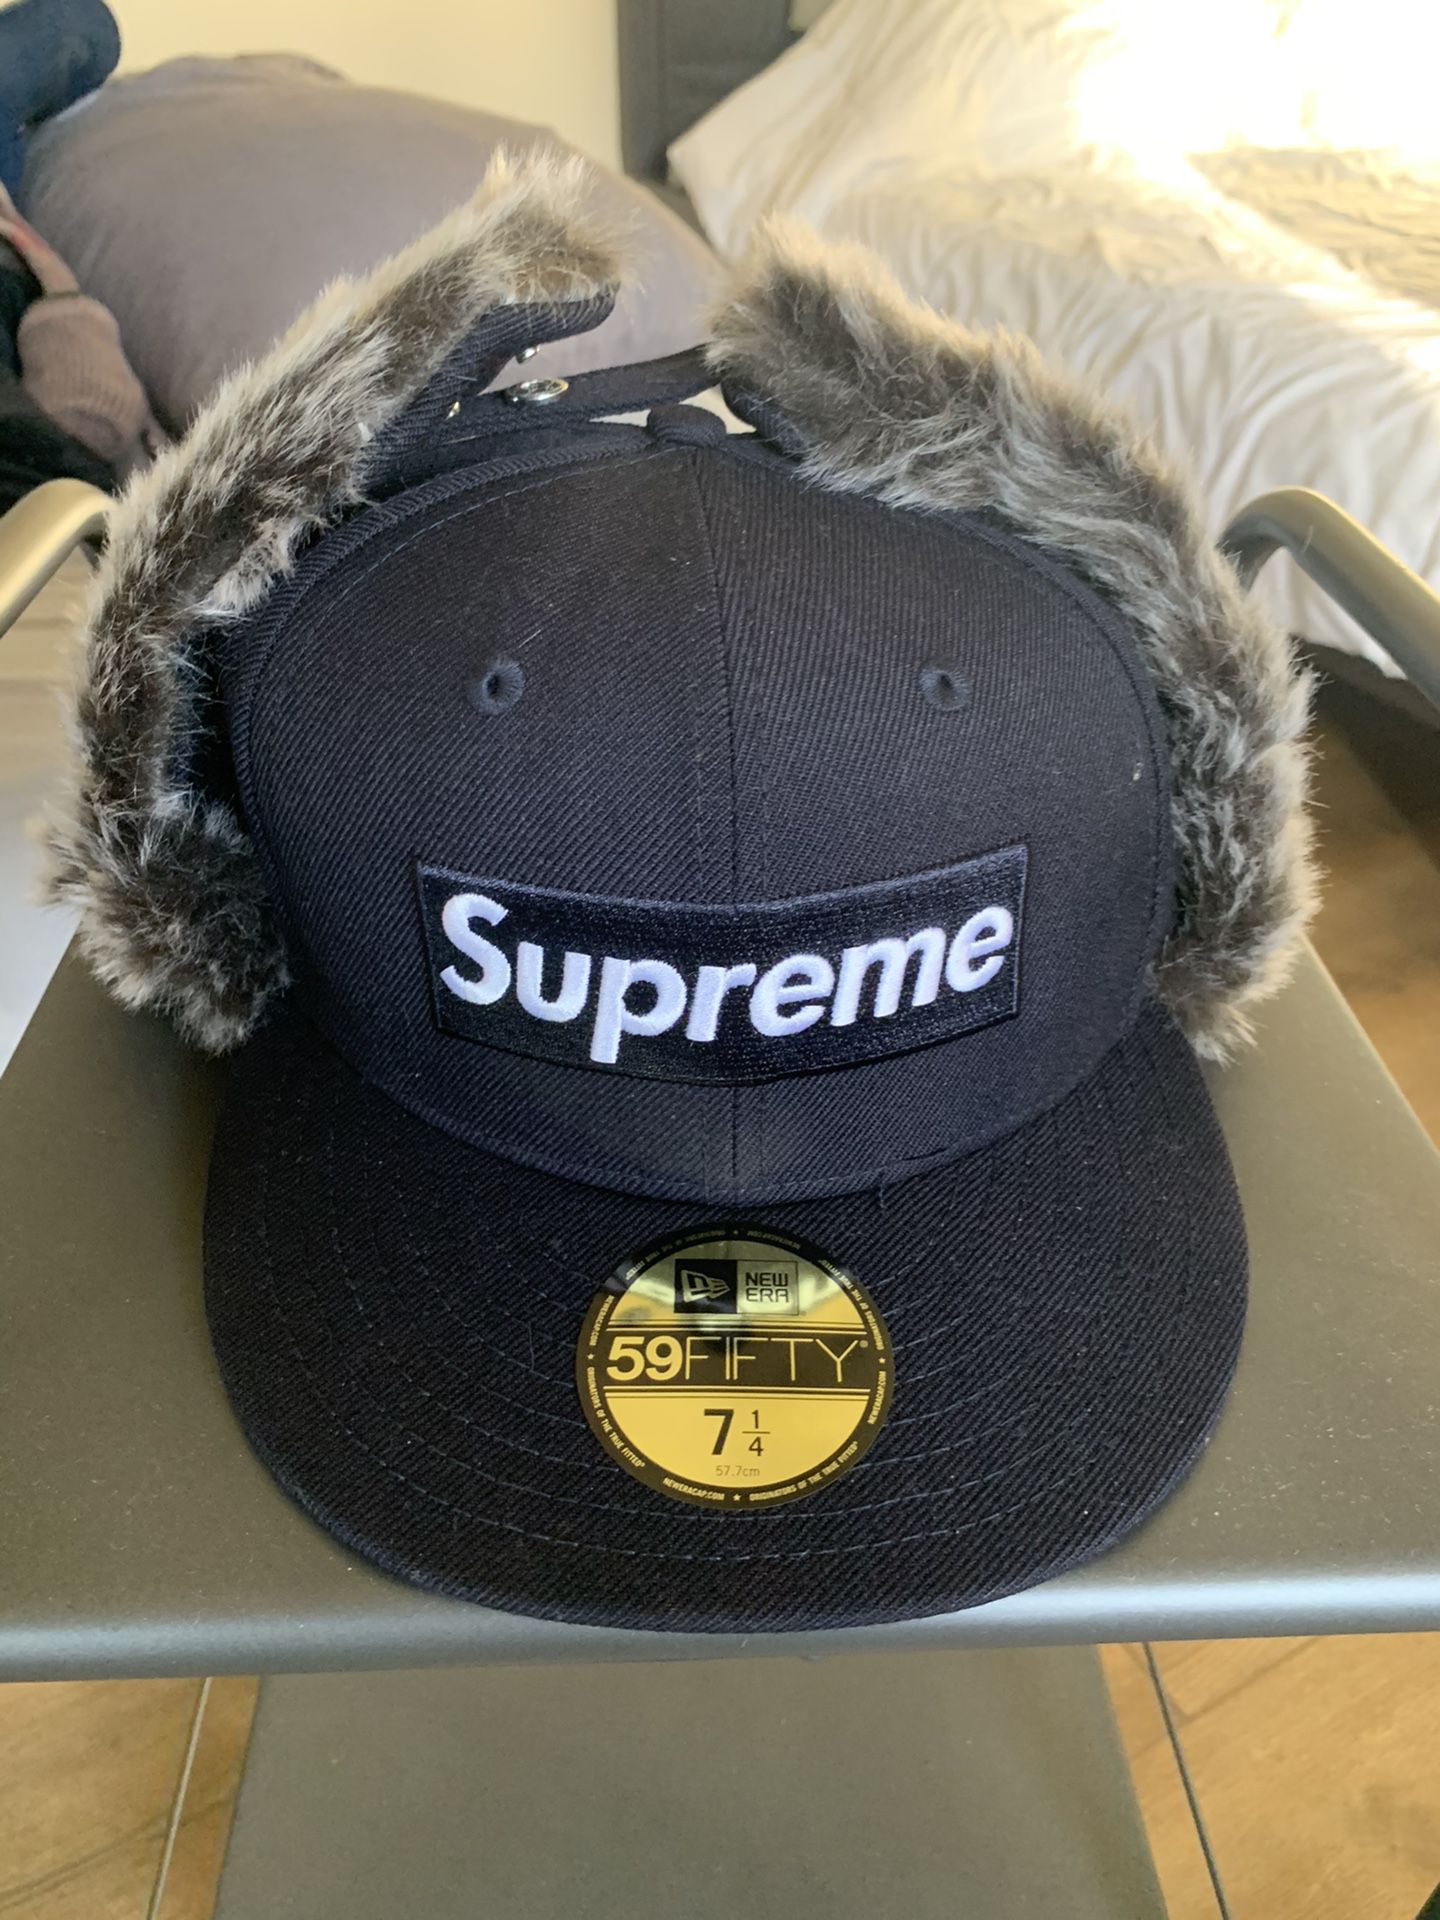 Supreme New Era earflap hat size 7 1/4